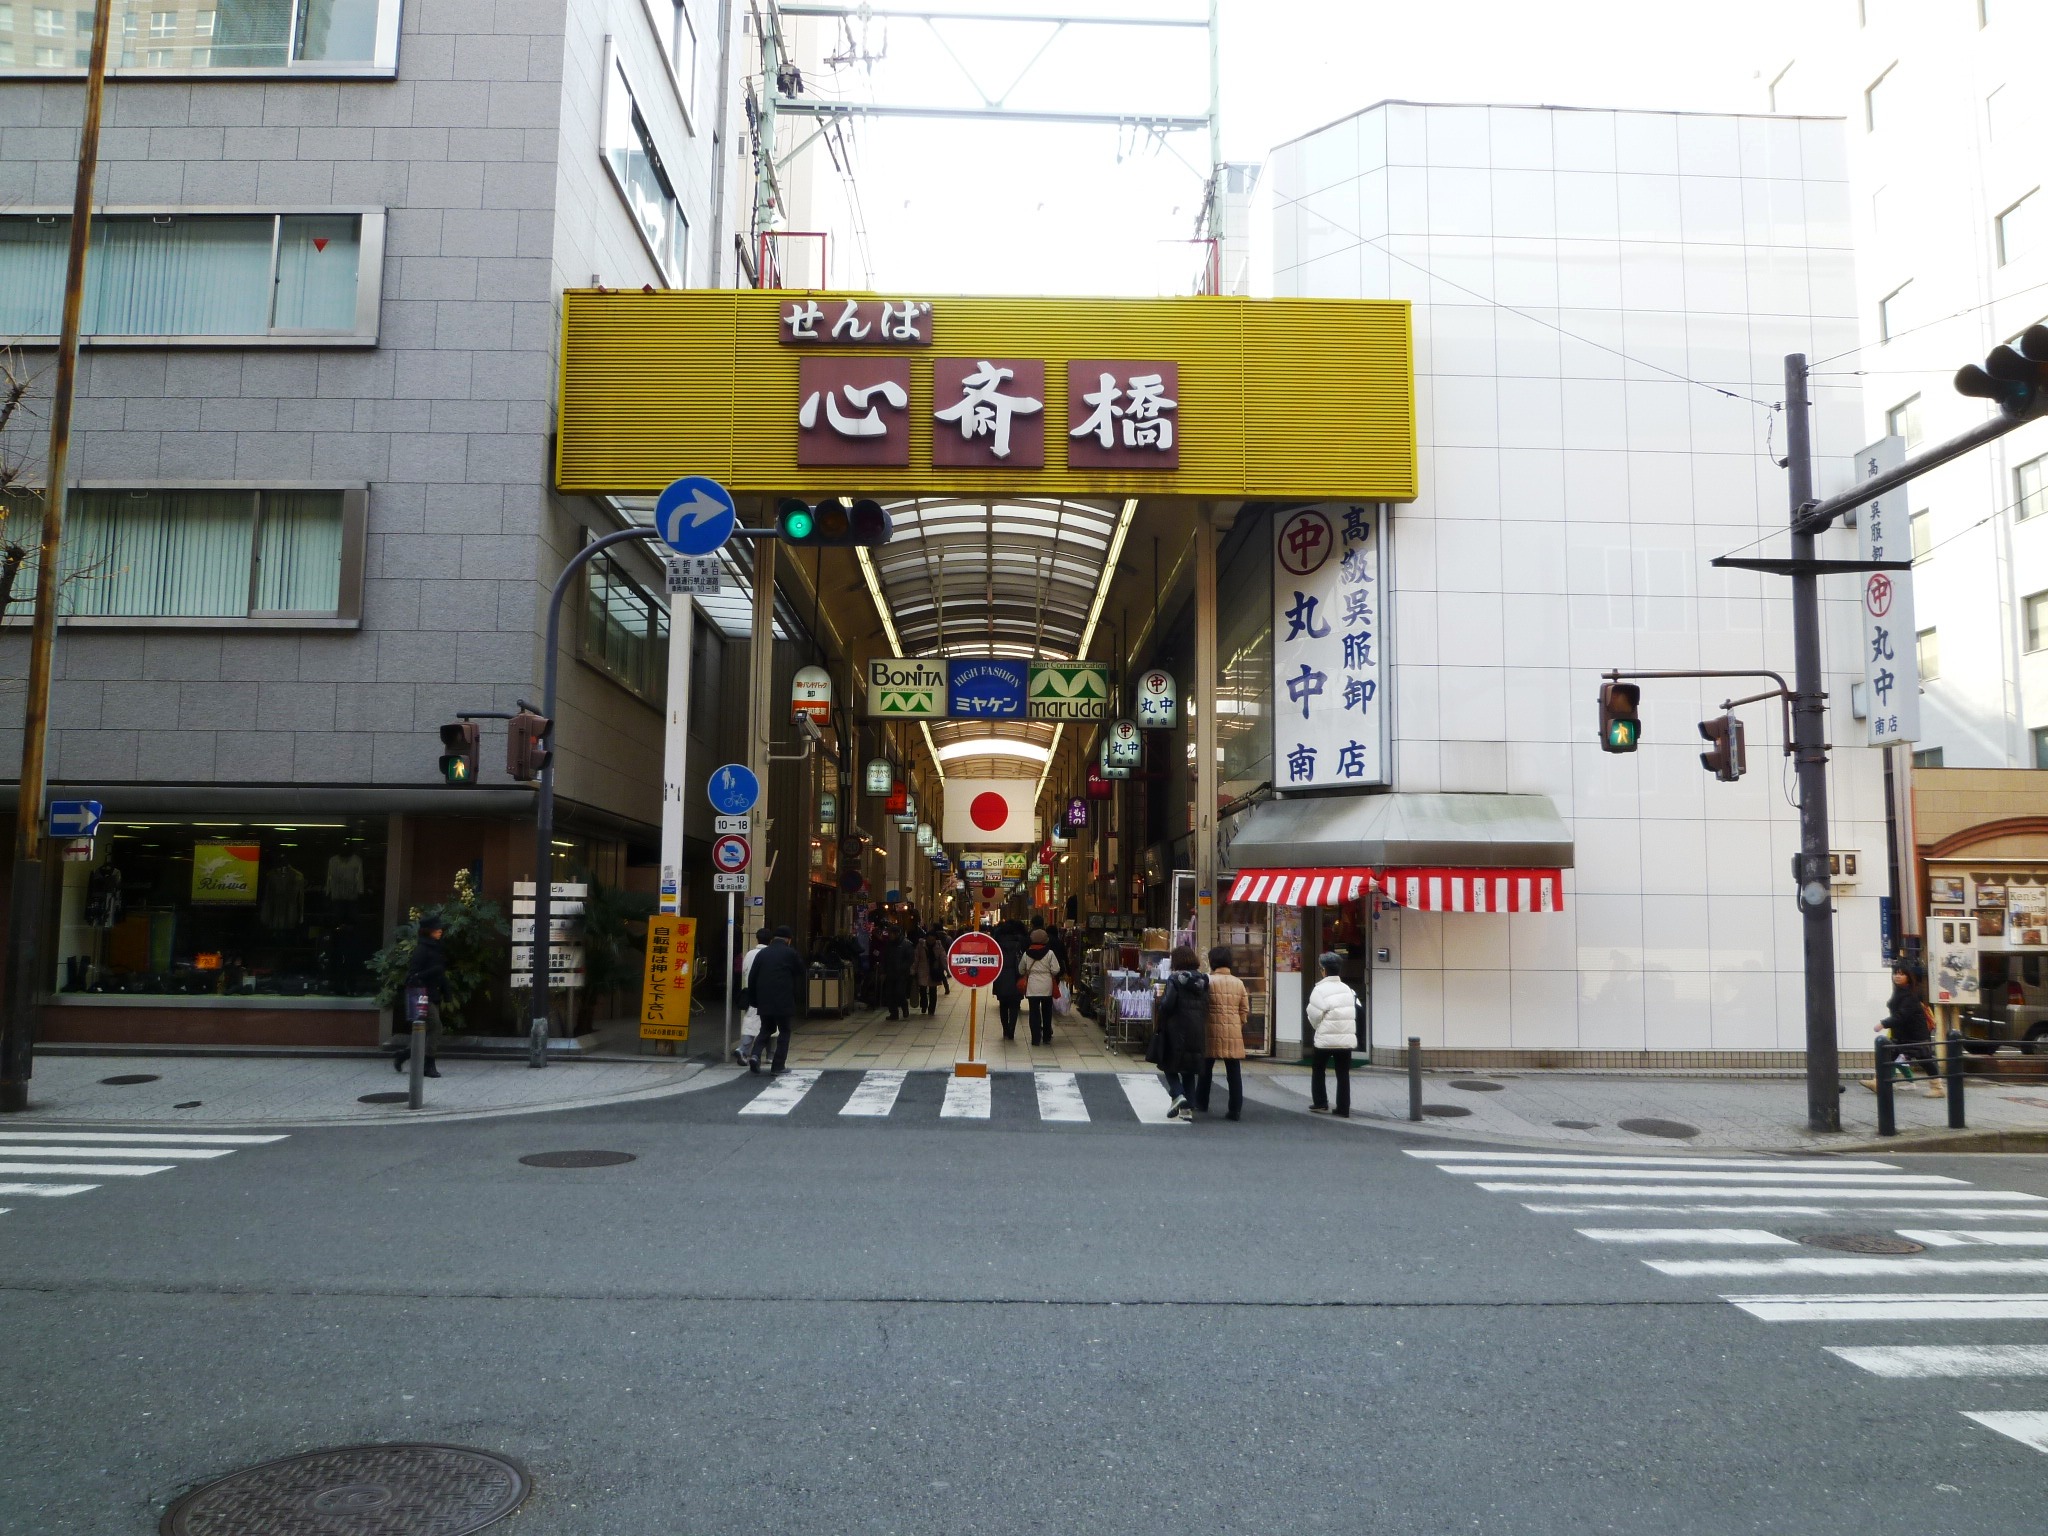 Shopping centre. Shinsaibashi shopping mall (shopping center) up to 100m